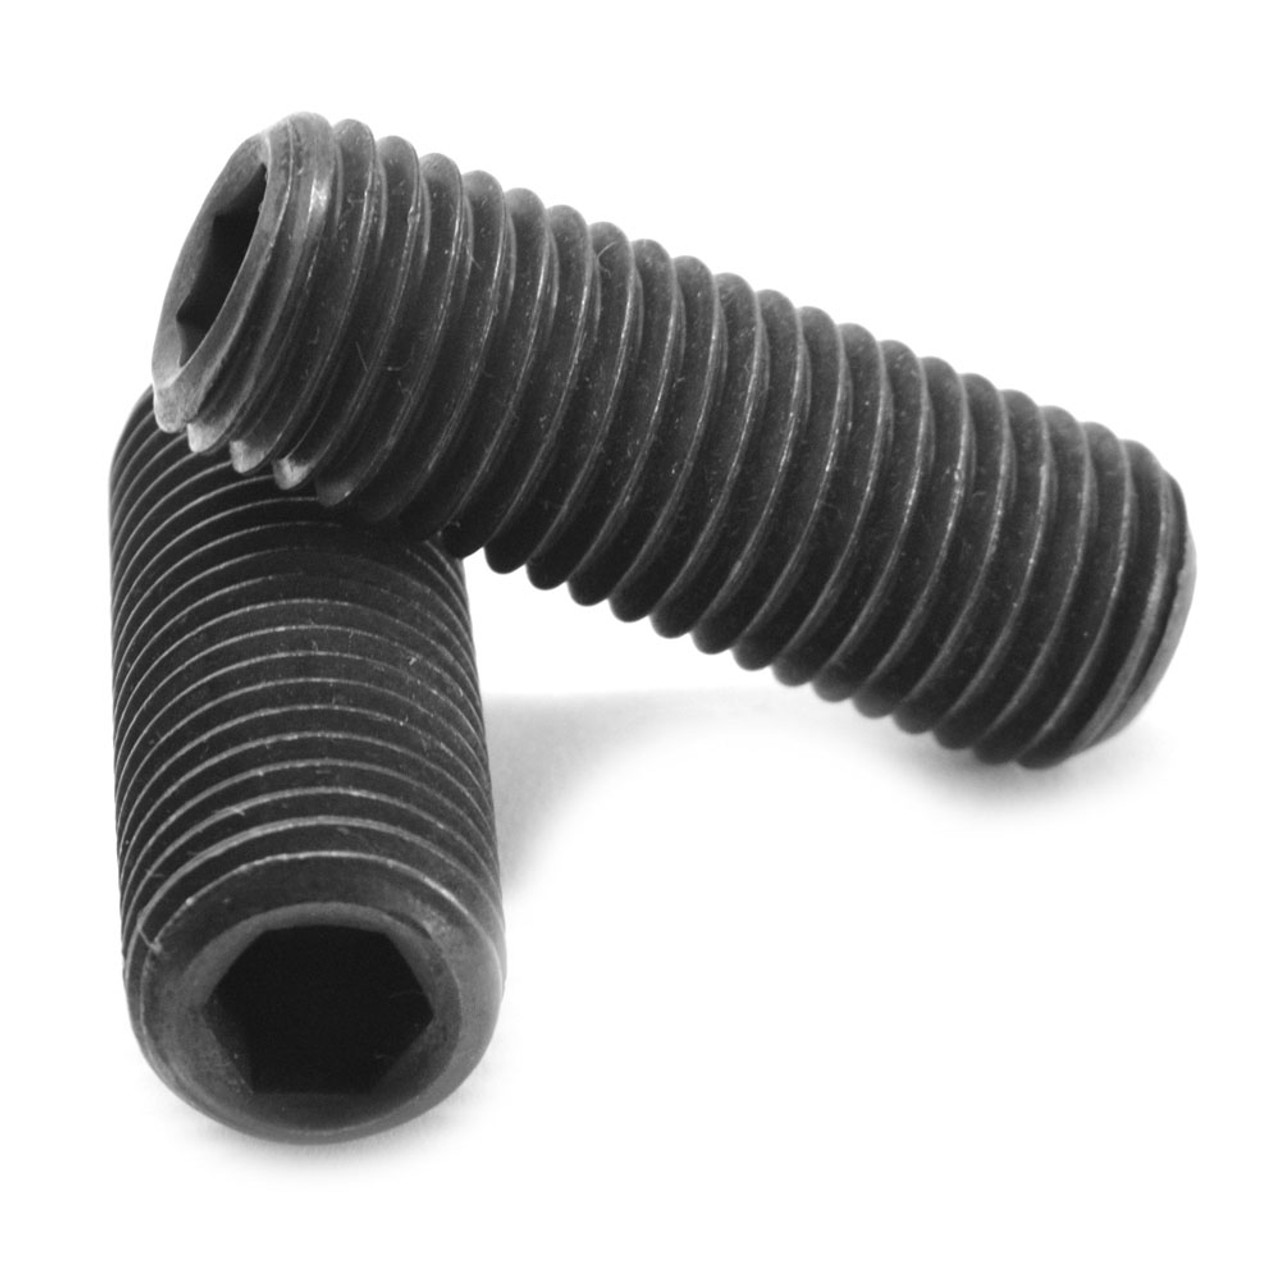 M24 x 3.00 x 55 MM Coarse Thread ISO 4029 / DIN 916 Class 45H Socket Set Screw Cup Point Alloy Steel Black Oxide